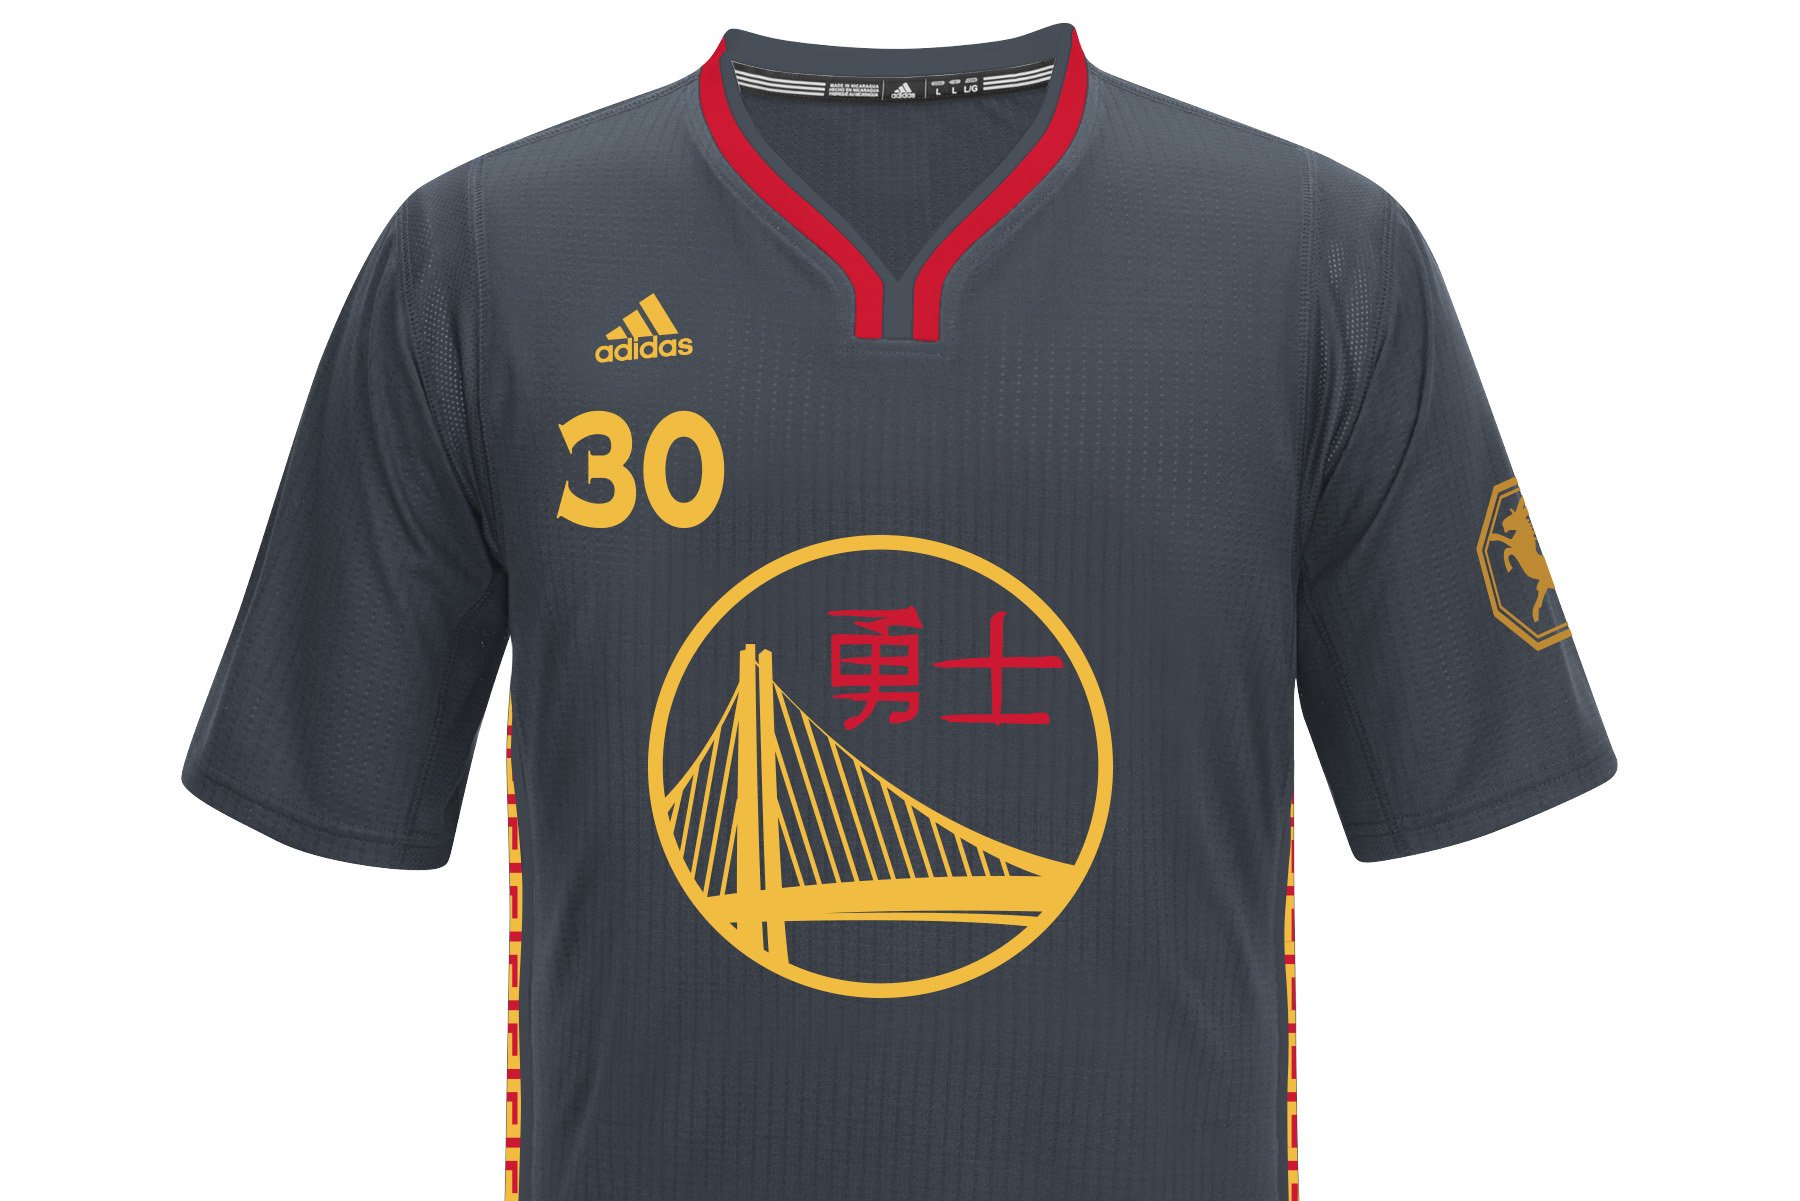 Golden State Warriors Unveil Sleeved Jerseys